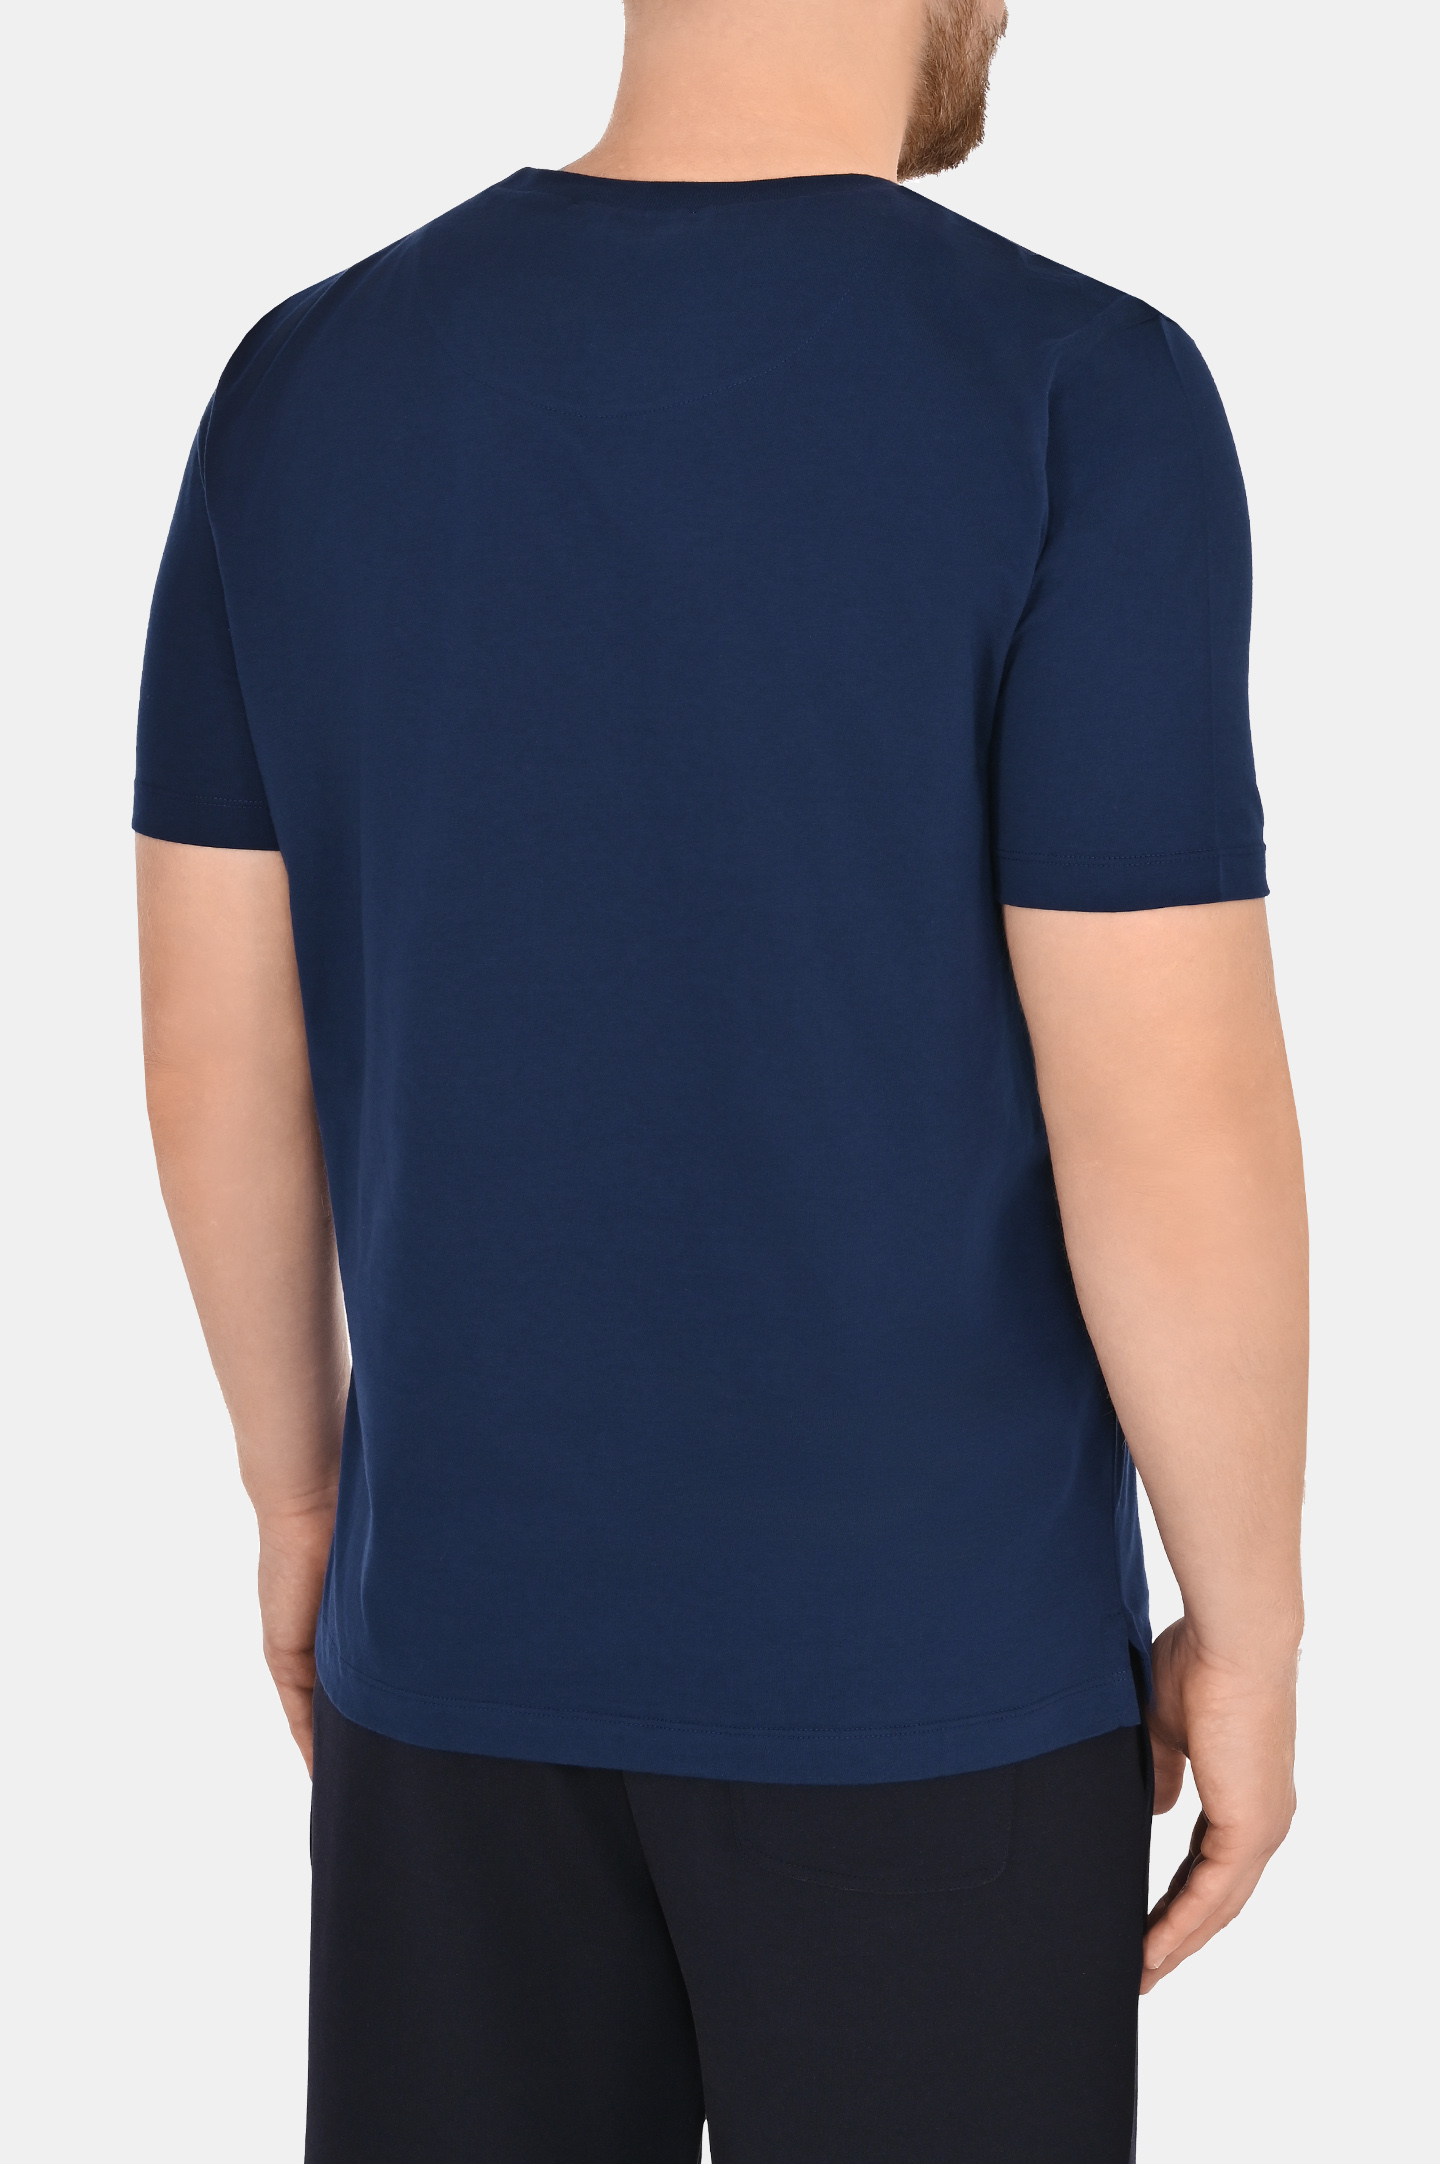 Хлопковая футболка с логотипом CANALI MJ02039 T0806/1, цвет: Темно-синий, Мужской